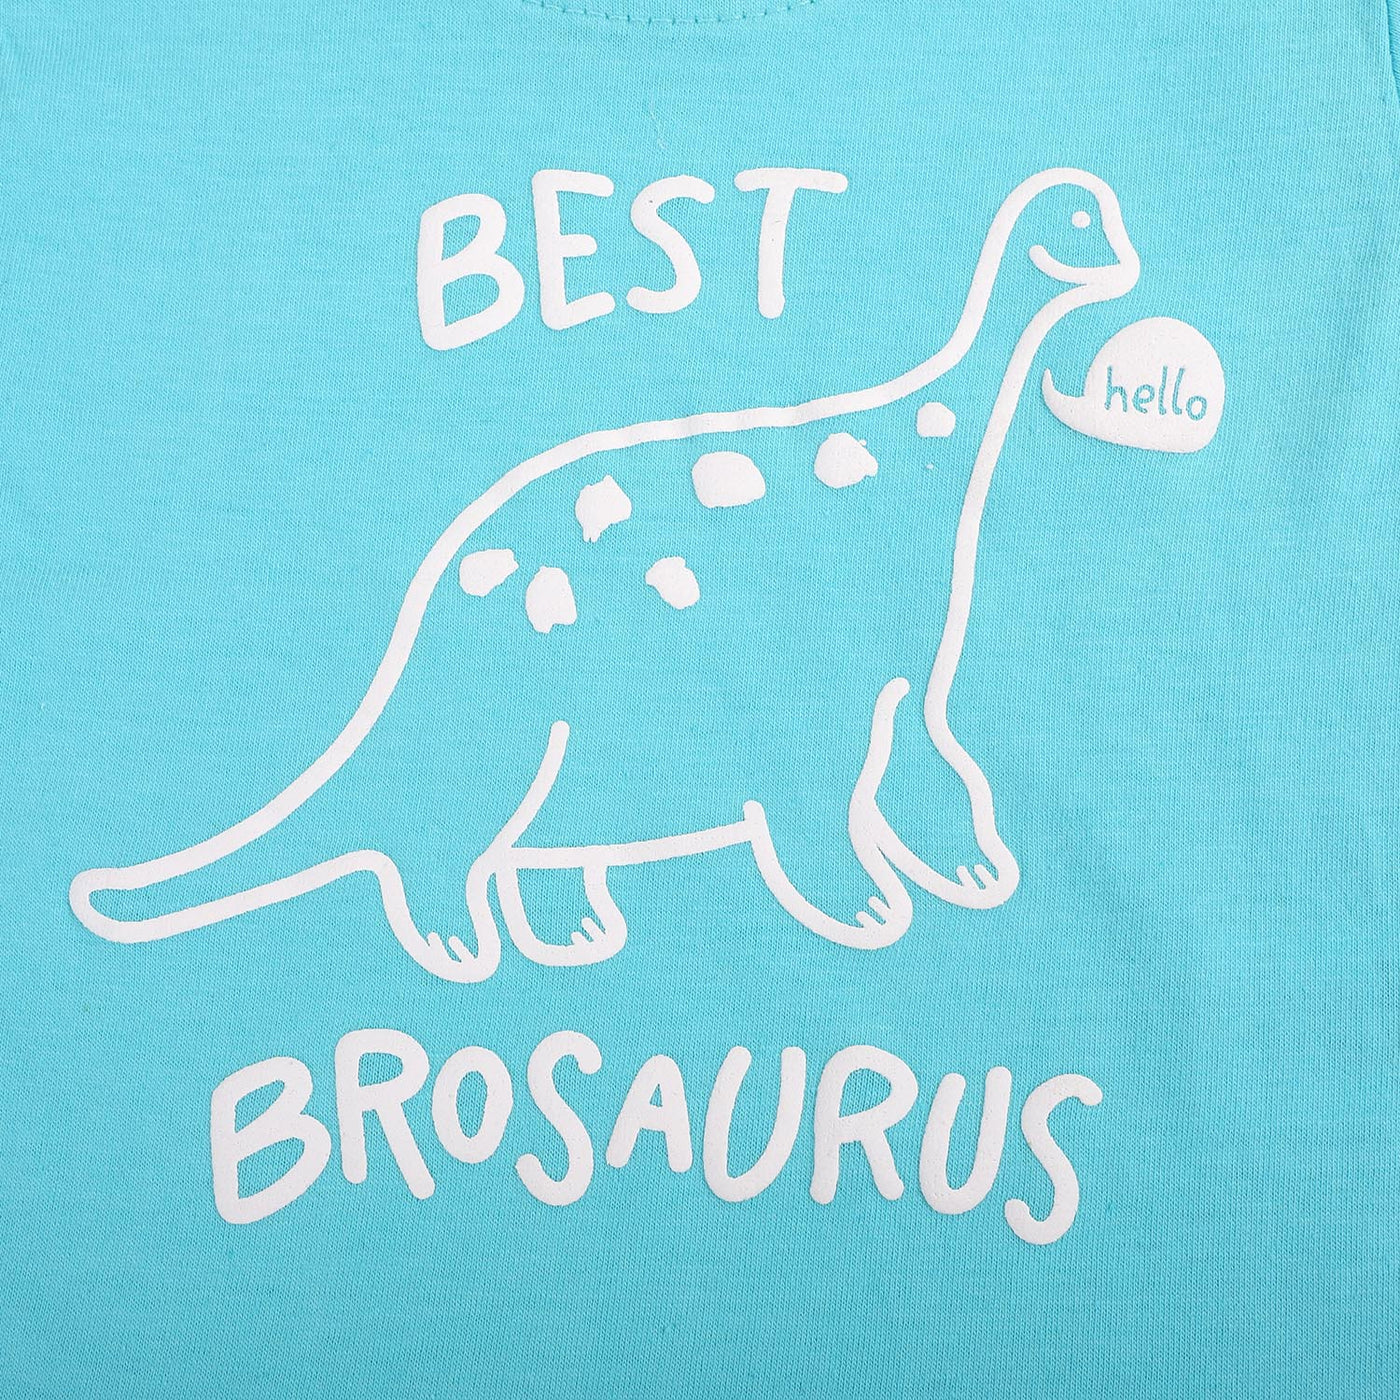 Infant Boys Cotton T-Shirt Barosaurus - Blue